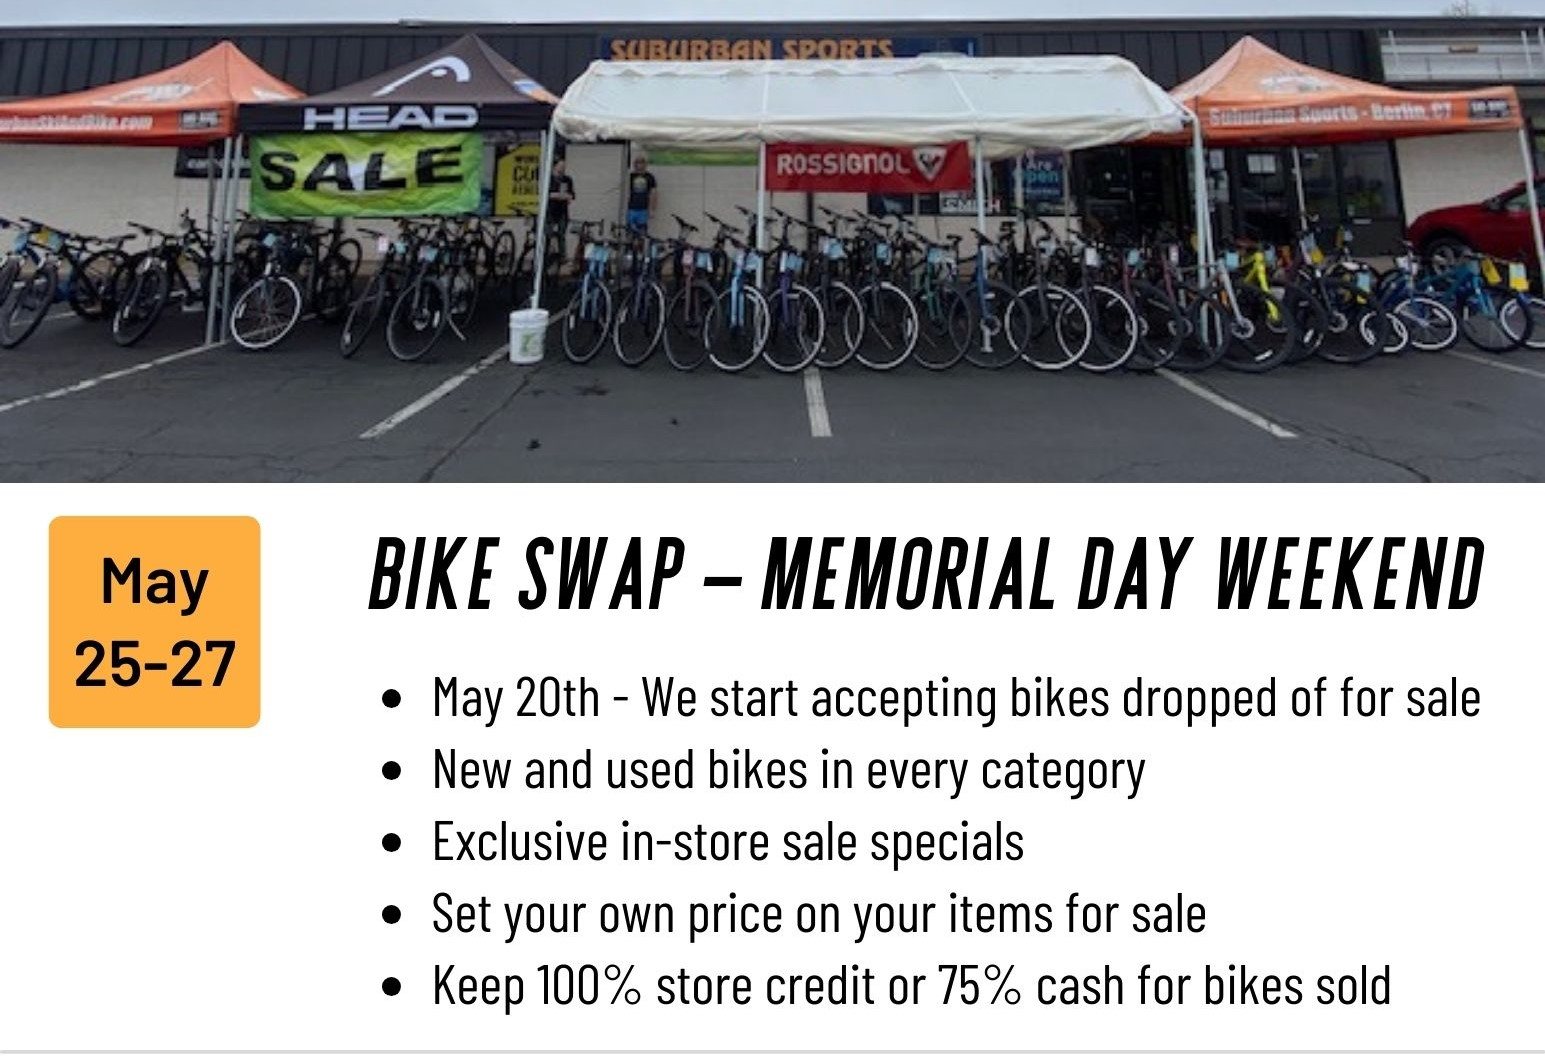 Memorial Day weekend bike swap - sell & buy new and used bikes